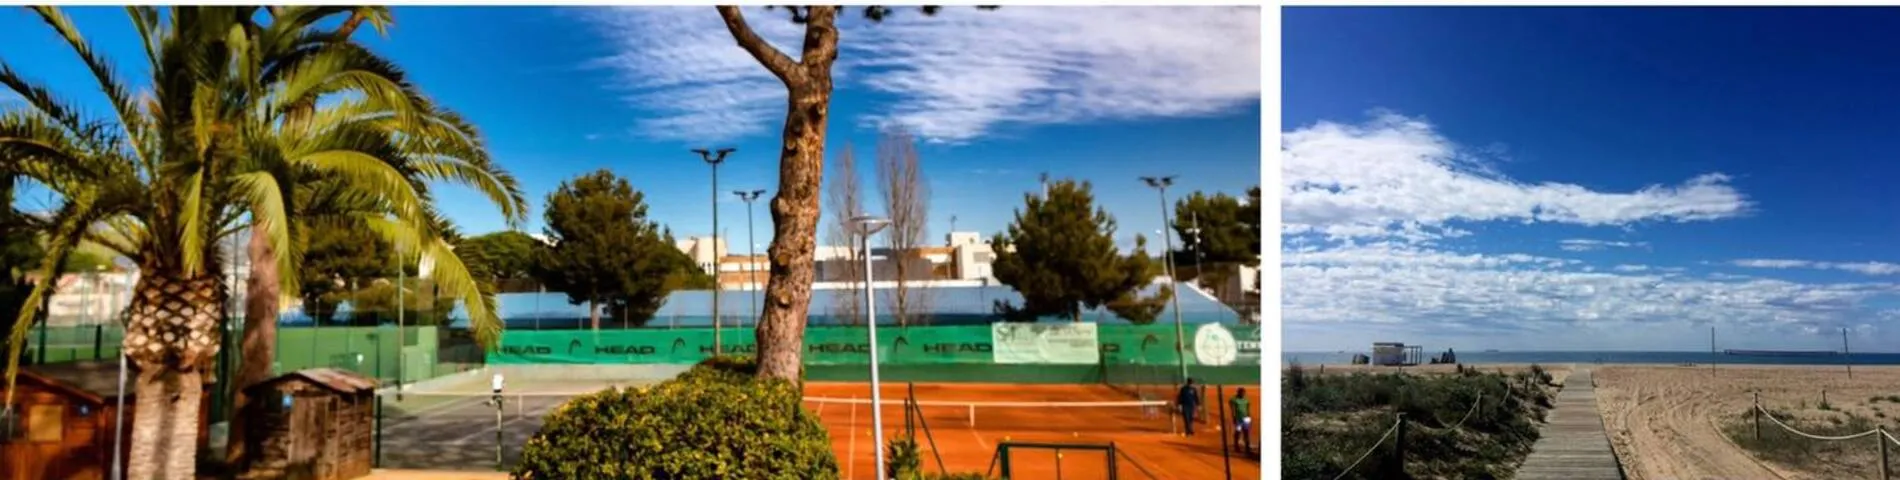 Barcelona Tennis Academy kép 1